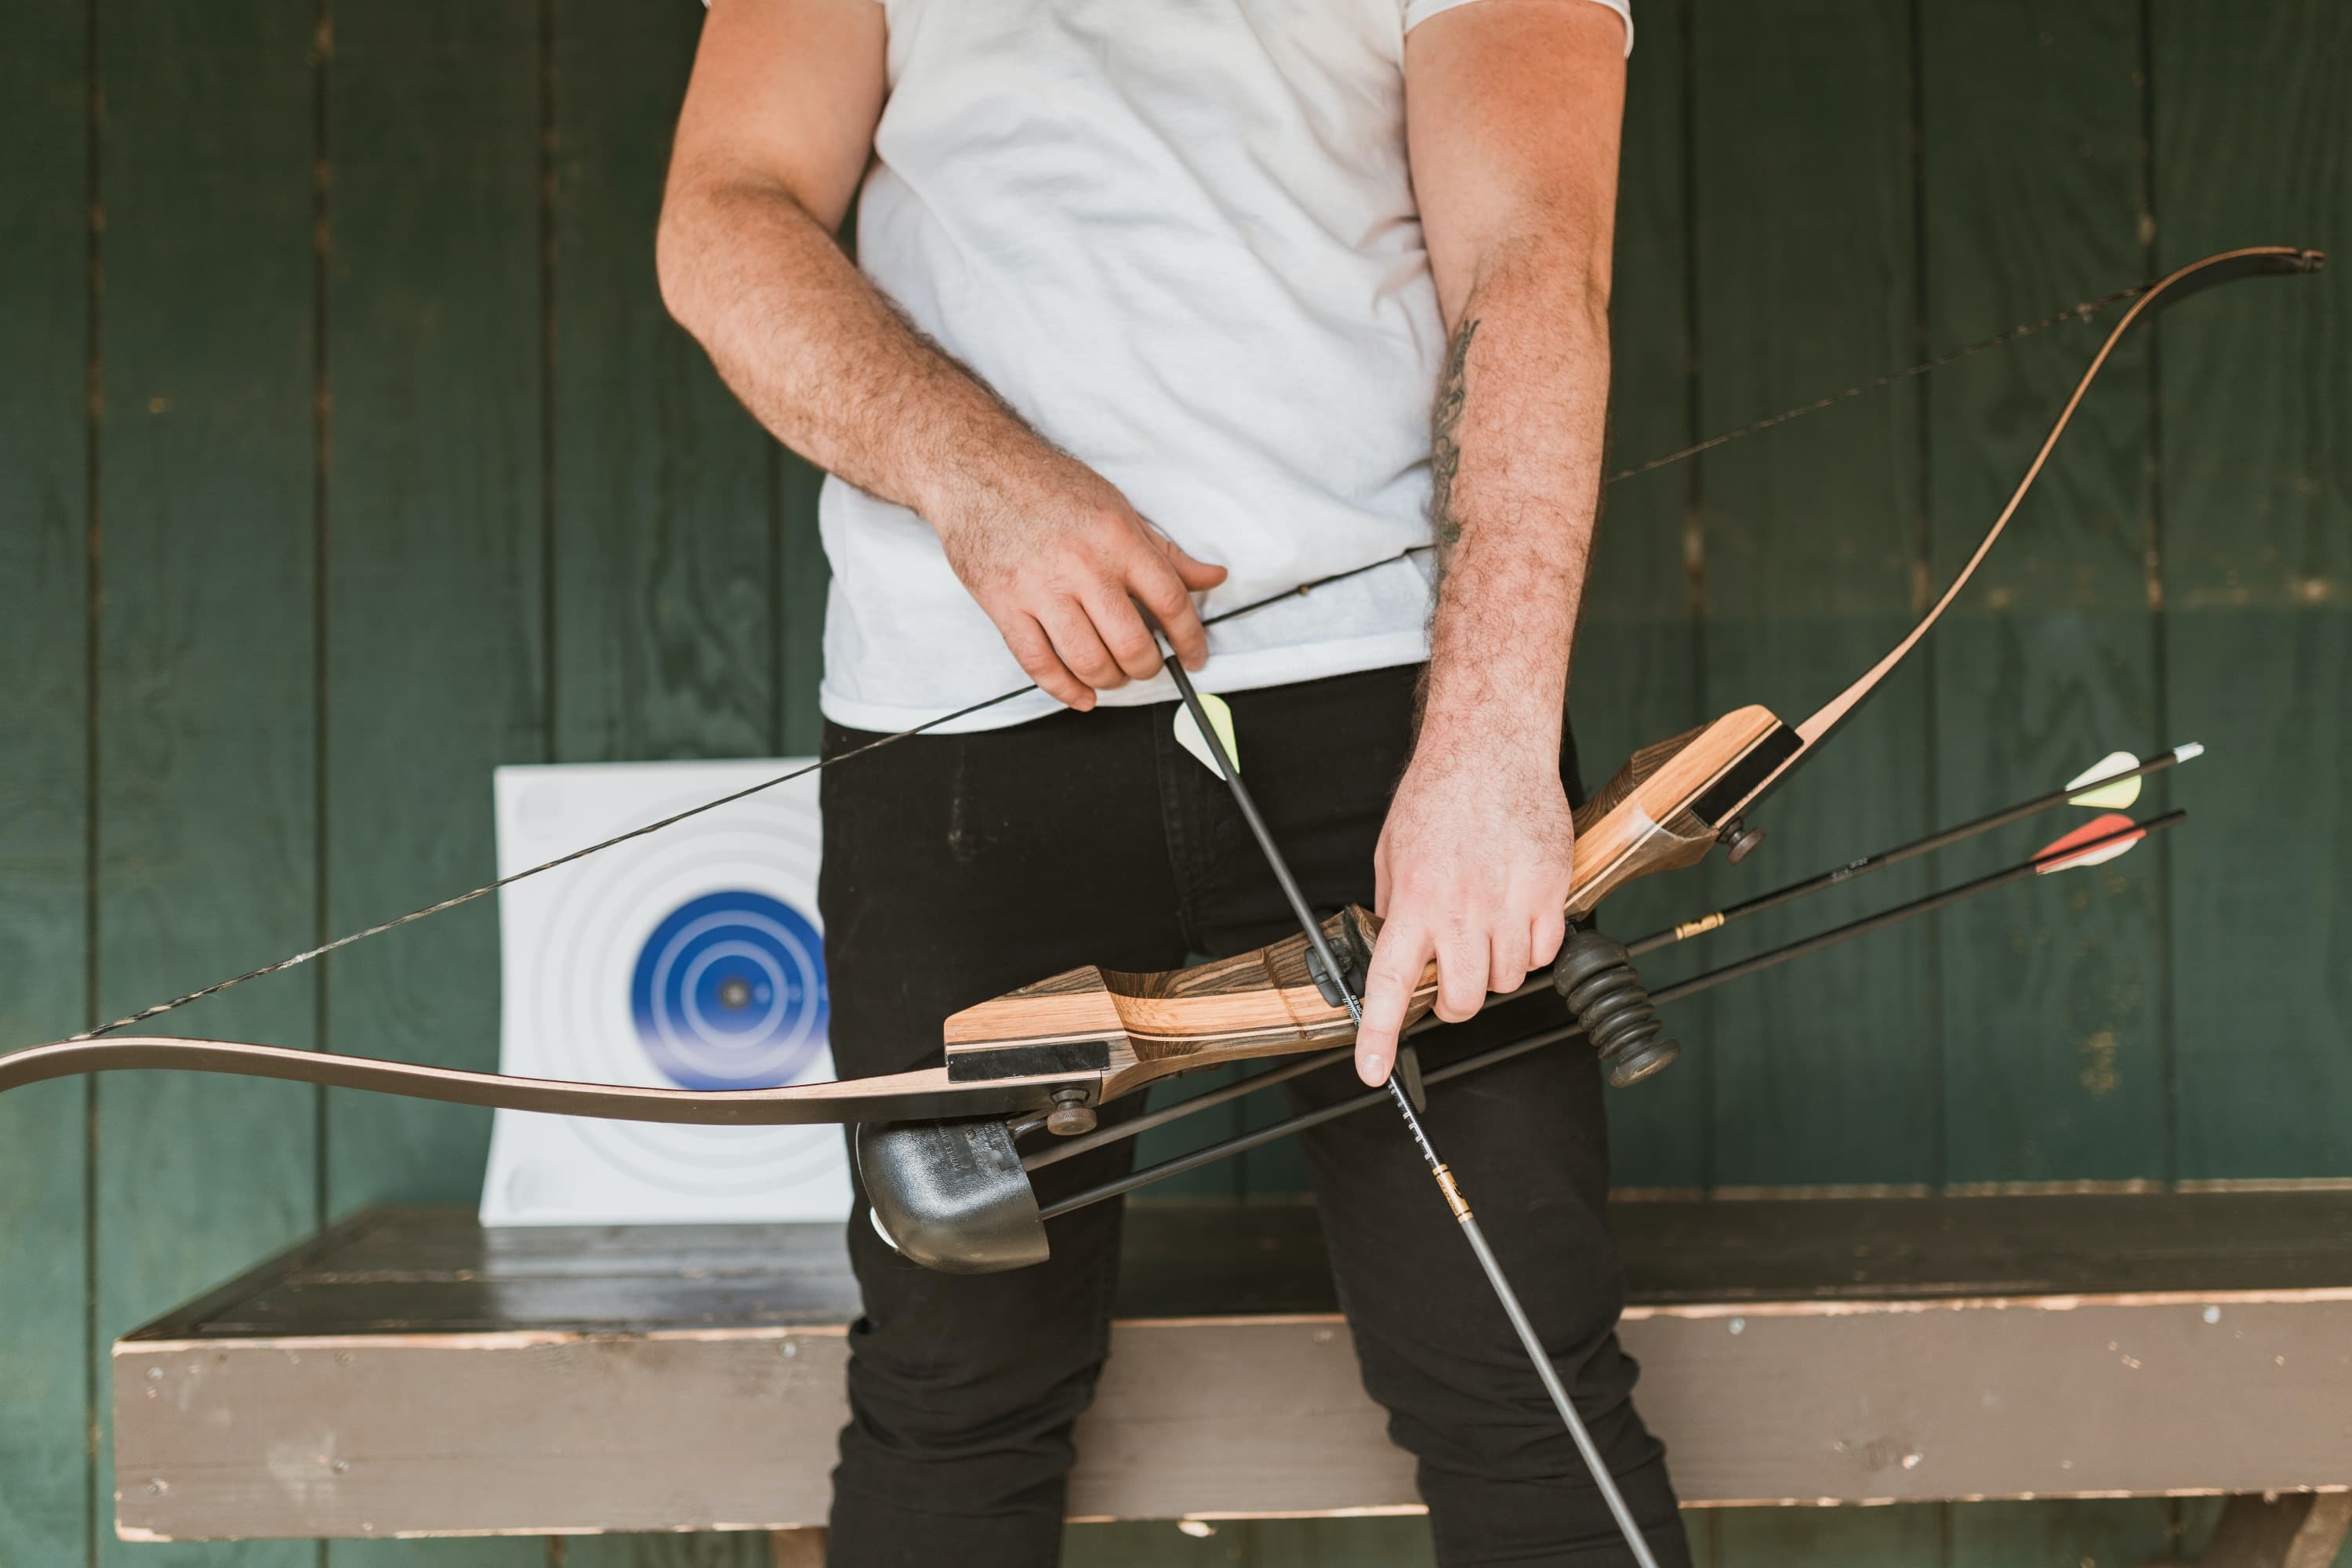 Arrow Building & Repair Tools-CHN Archery – CHN Archery